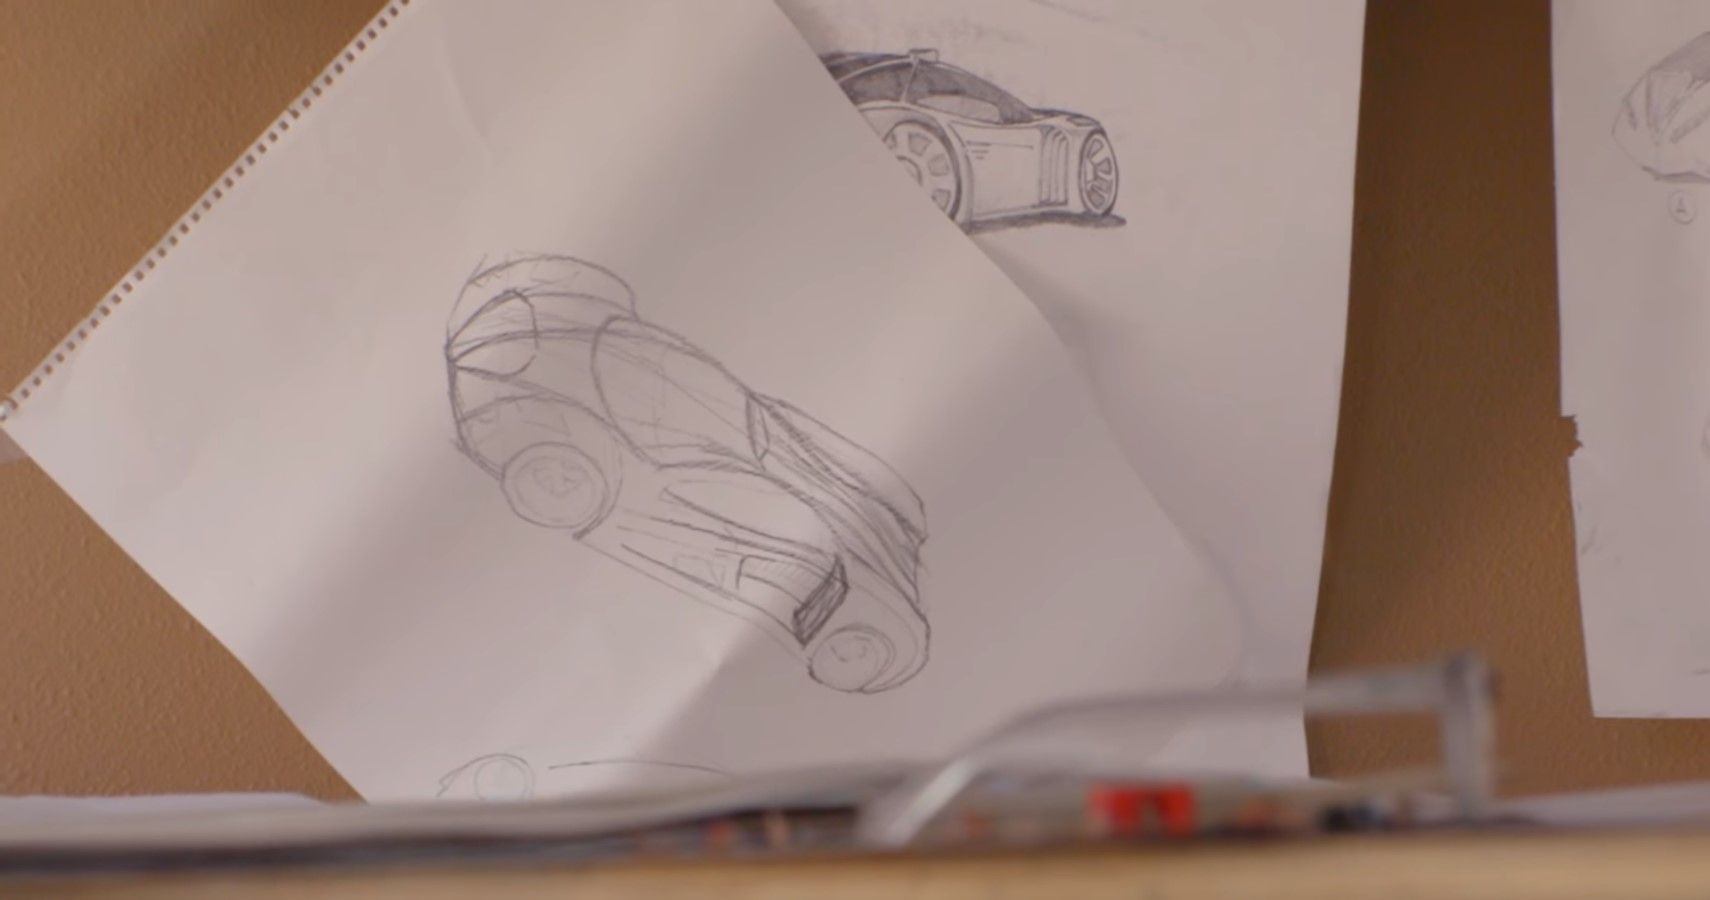 Mark's dream concept car sketch